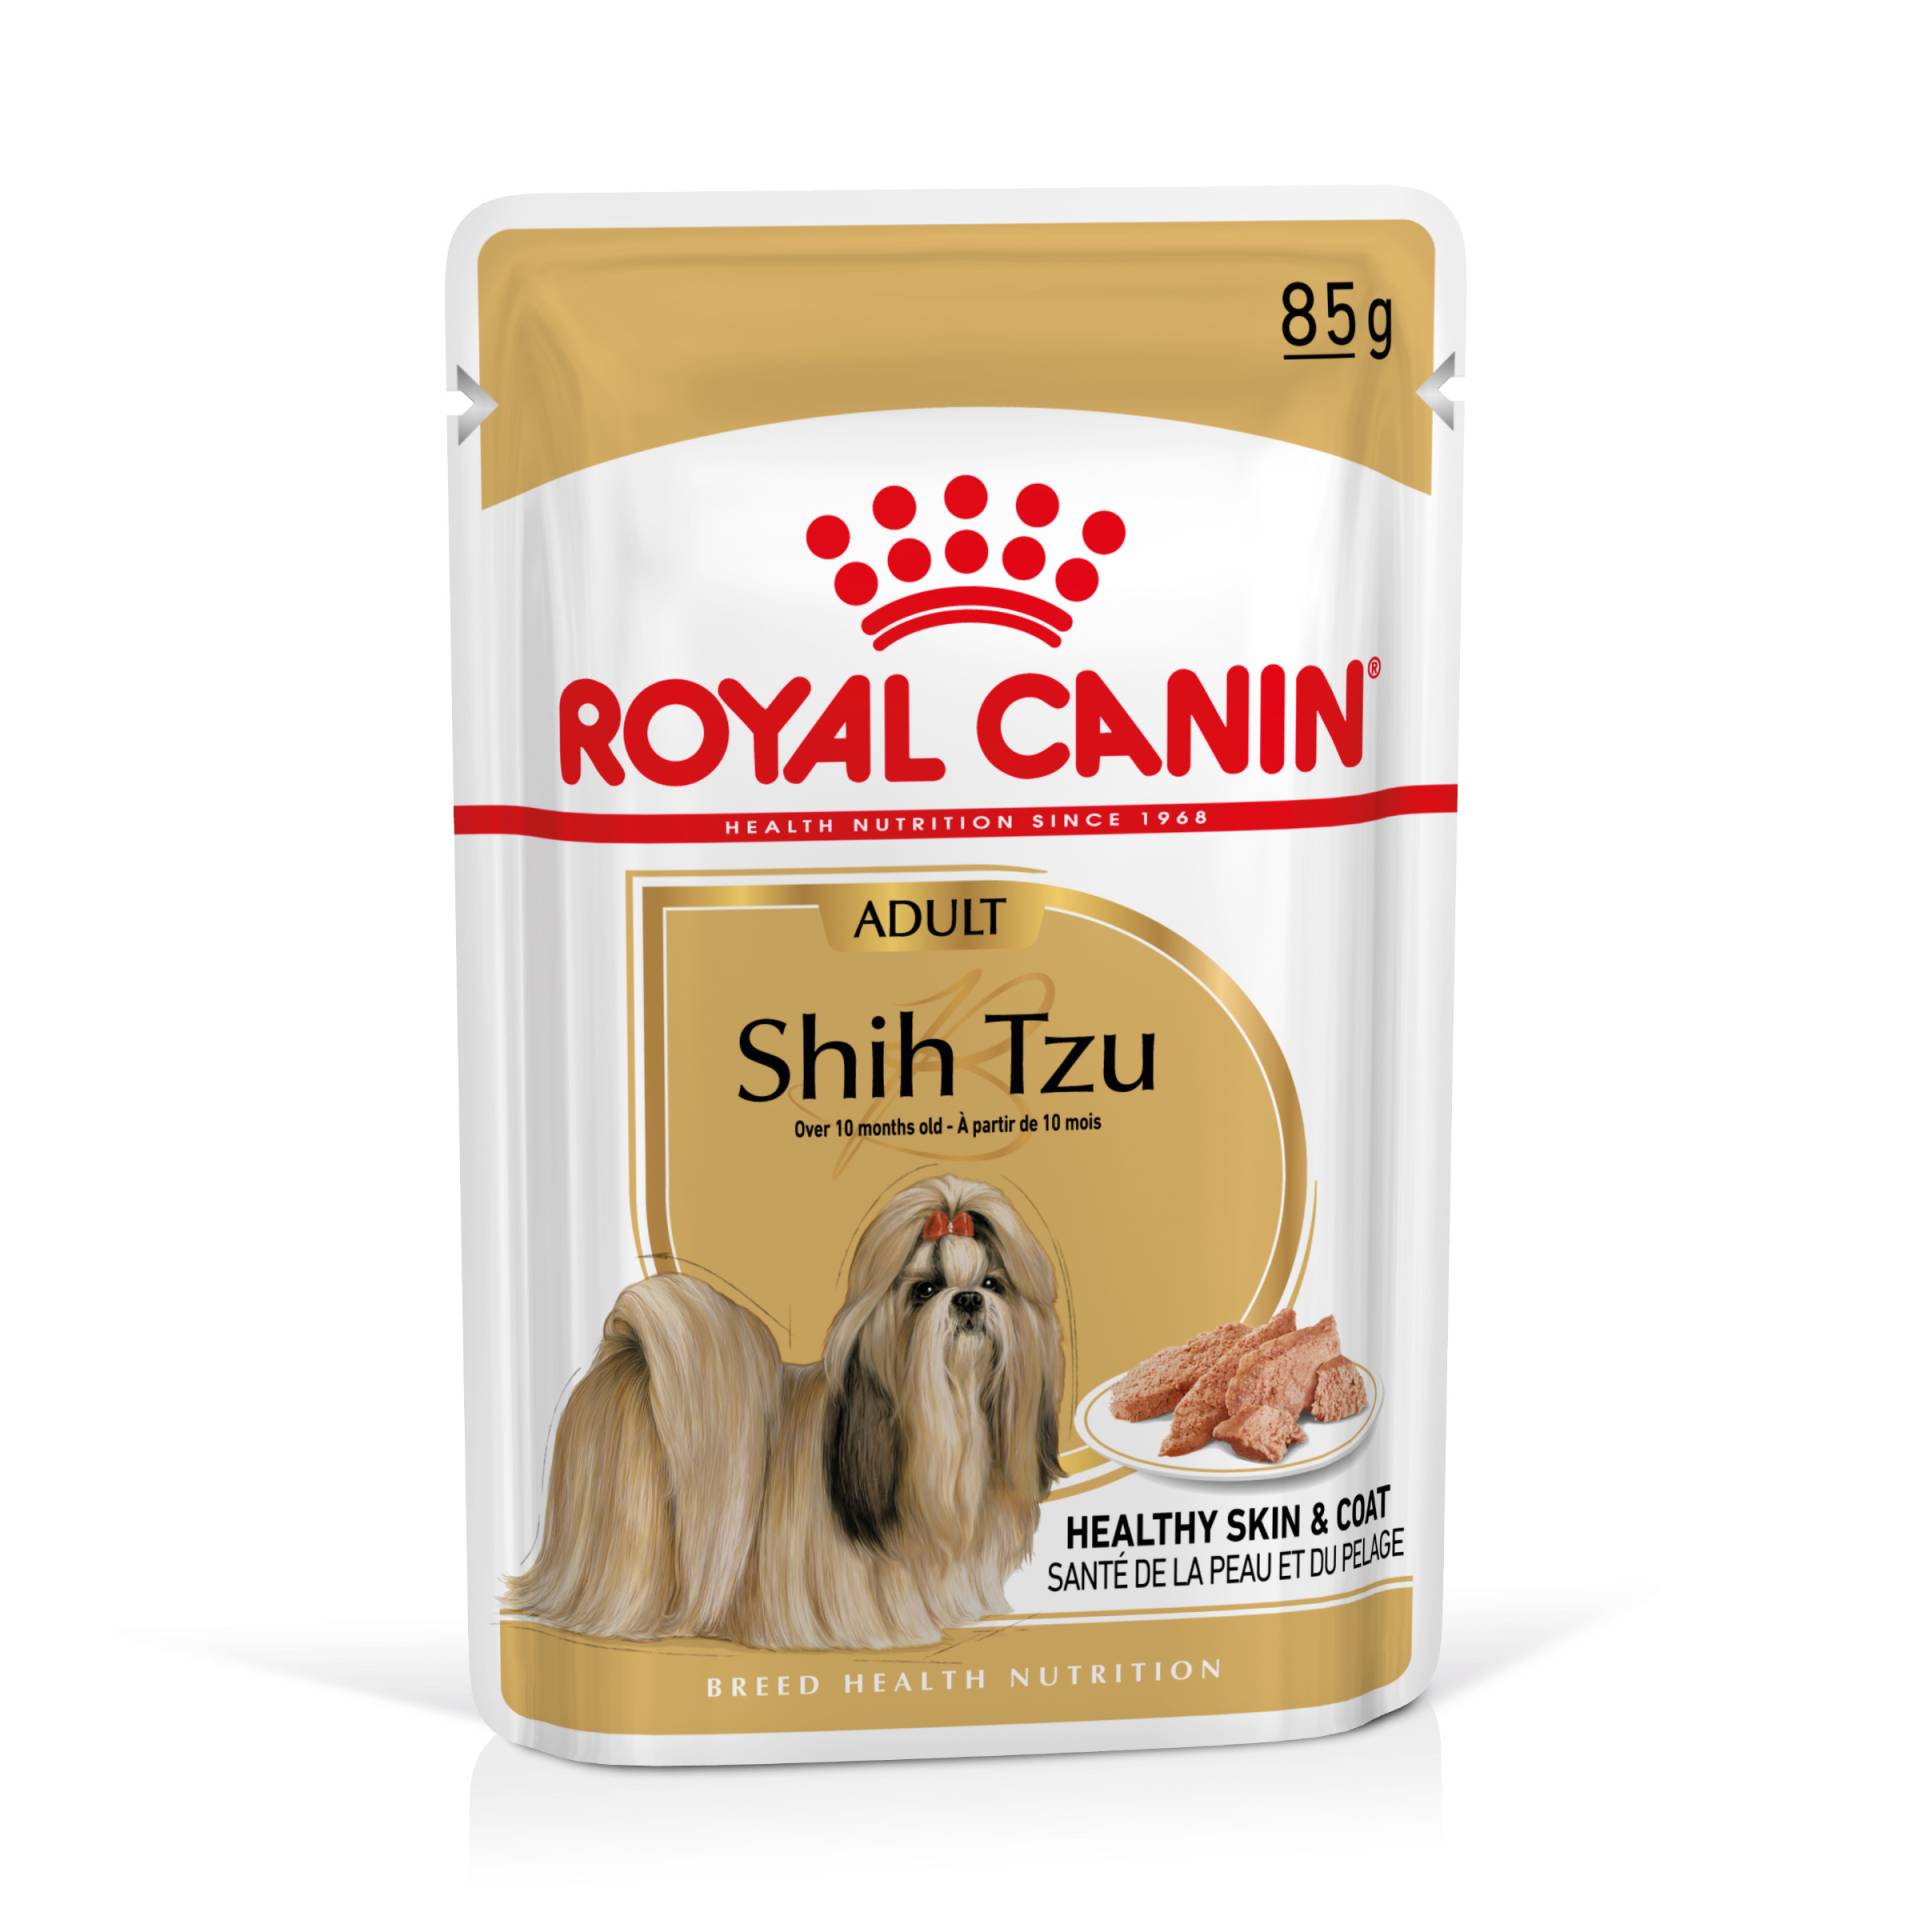 Royal Canin Shih Tzu Adult Mousse - Sparpaket: 24 x 85 g von Royal Canin Breed